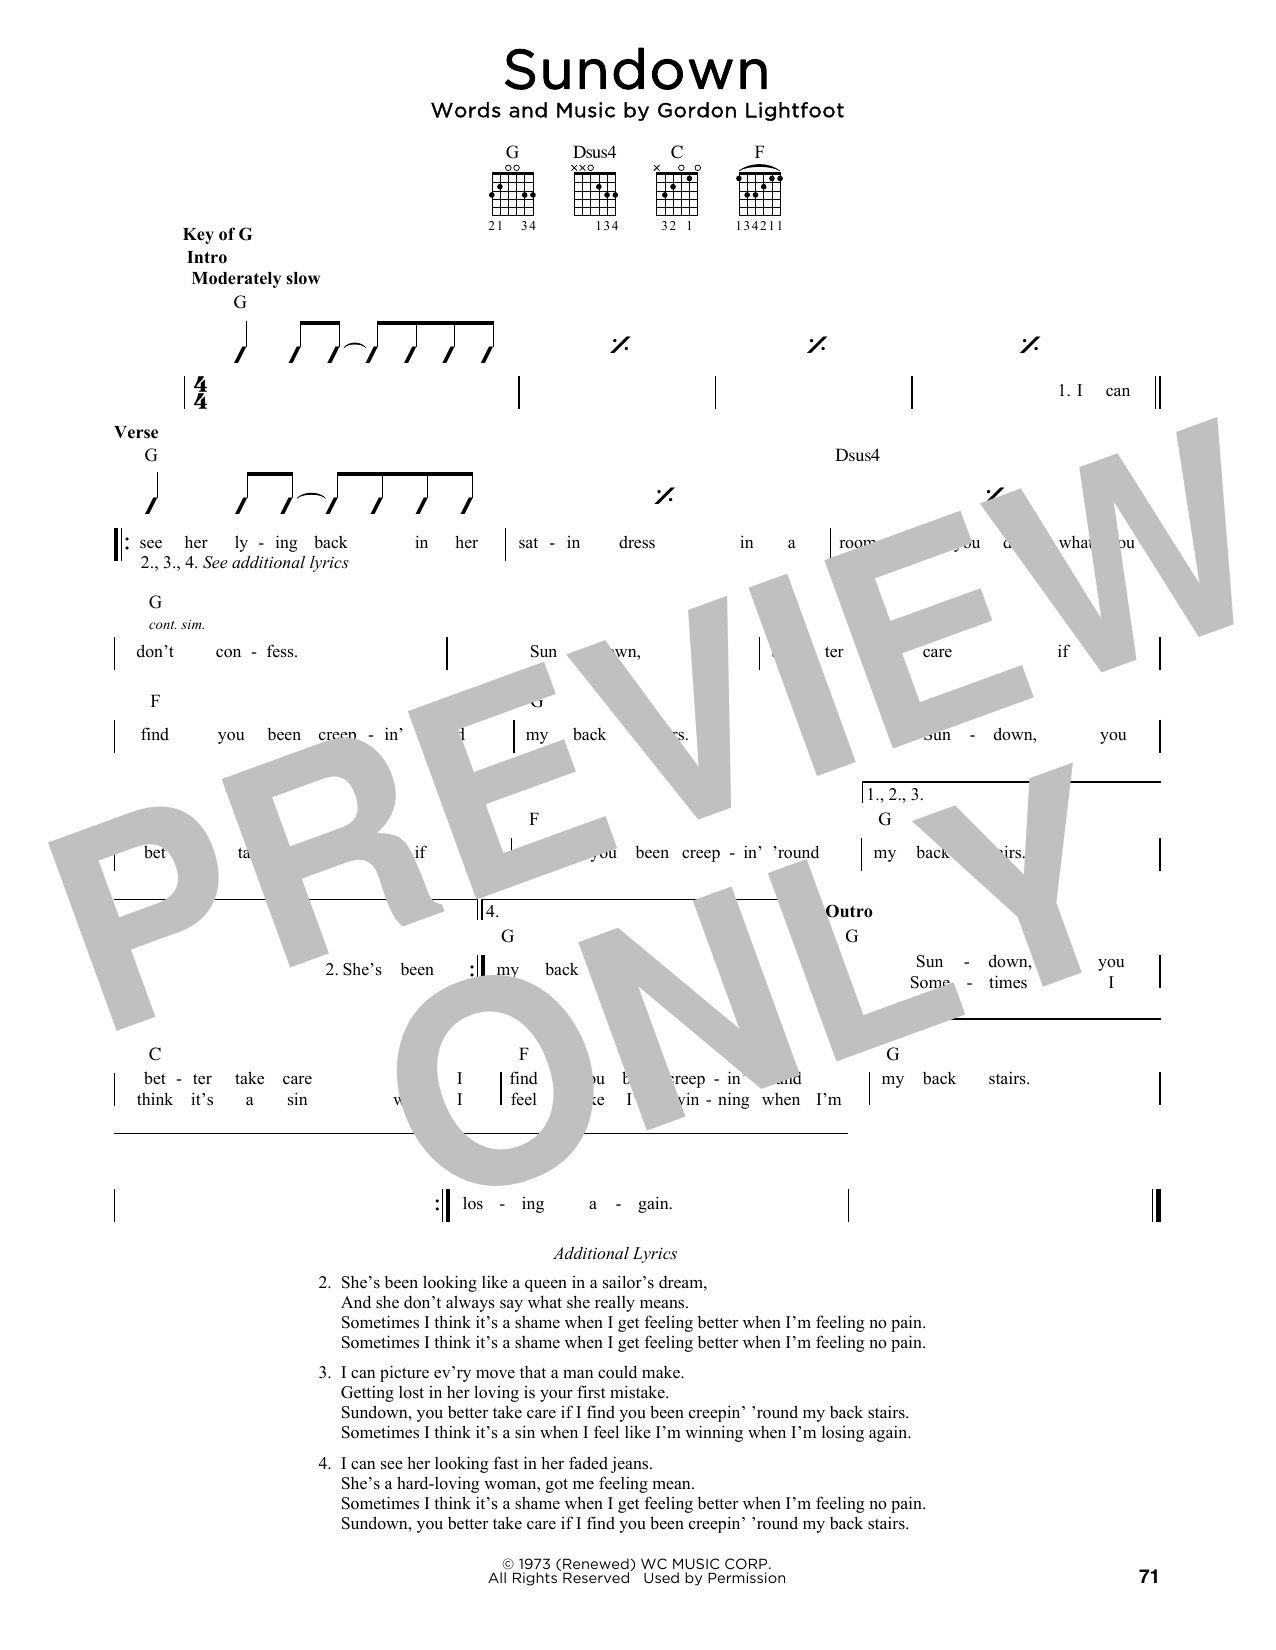 Gordon Lightfoot Sundown Sheet Music Notes & Chords for Ukulele - Download or Print PDF